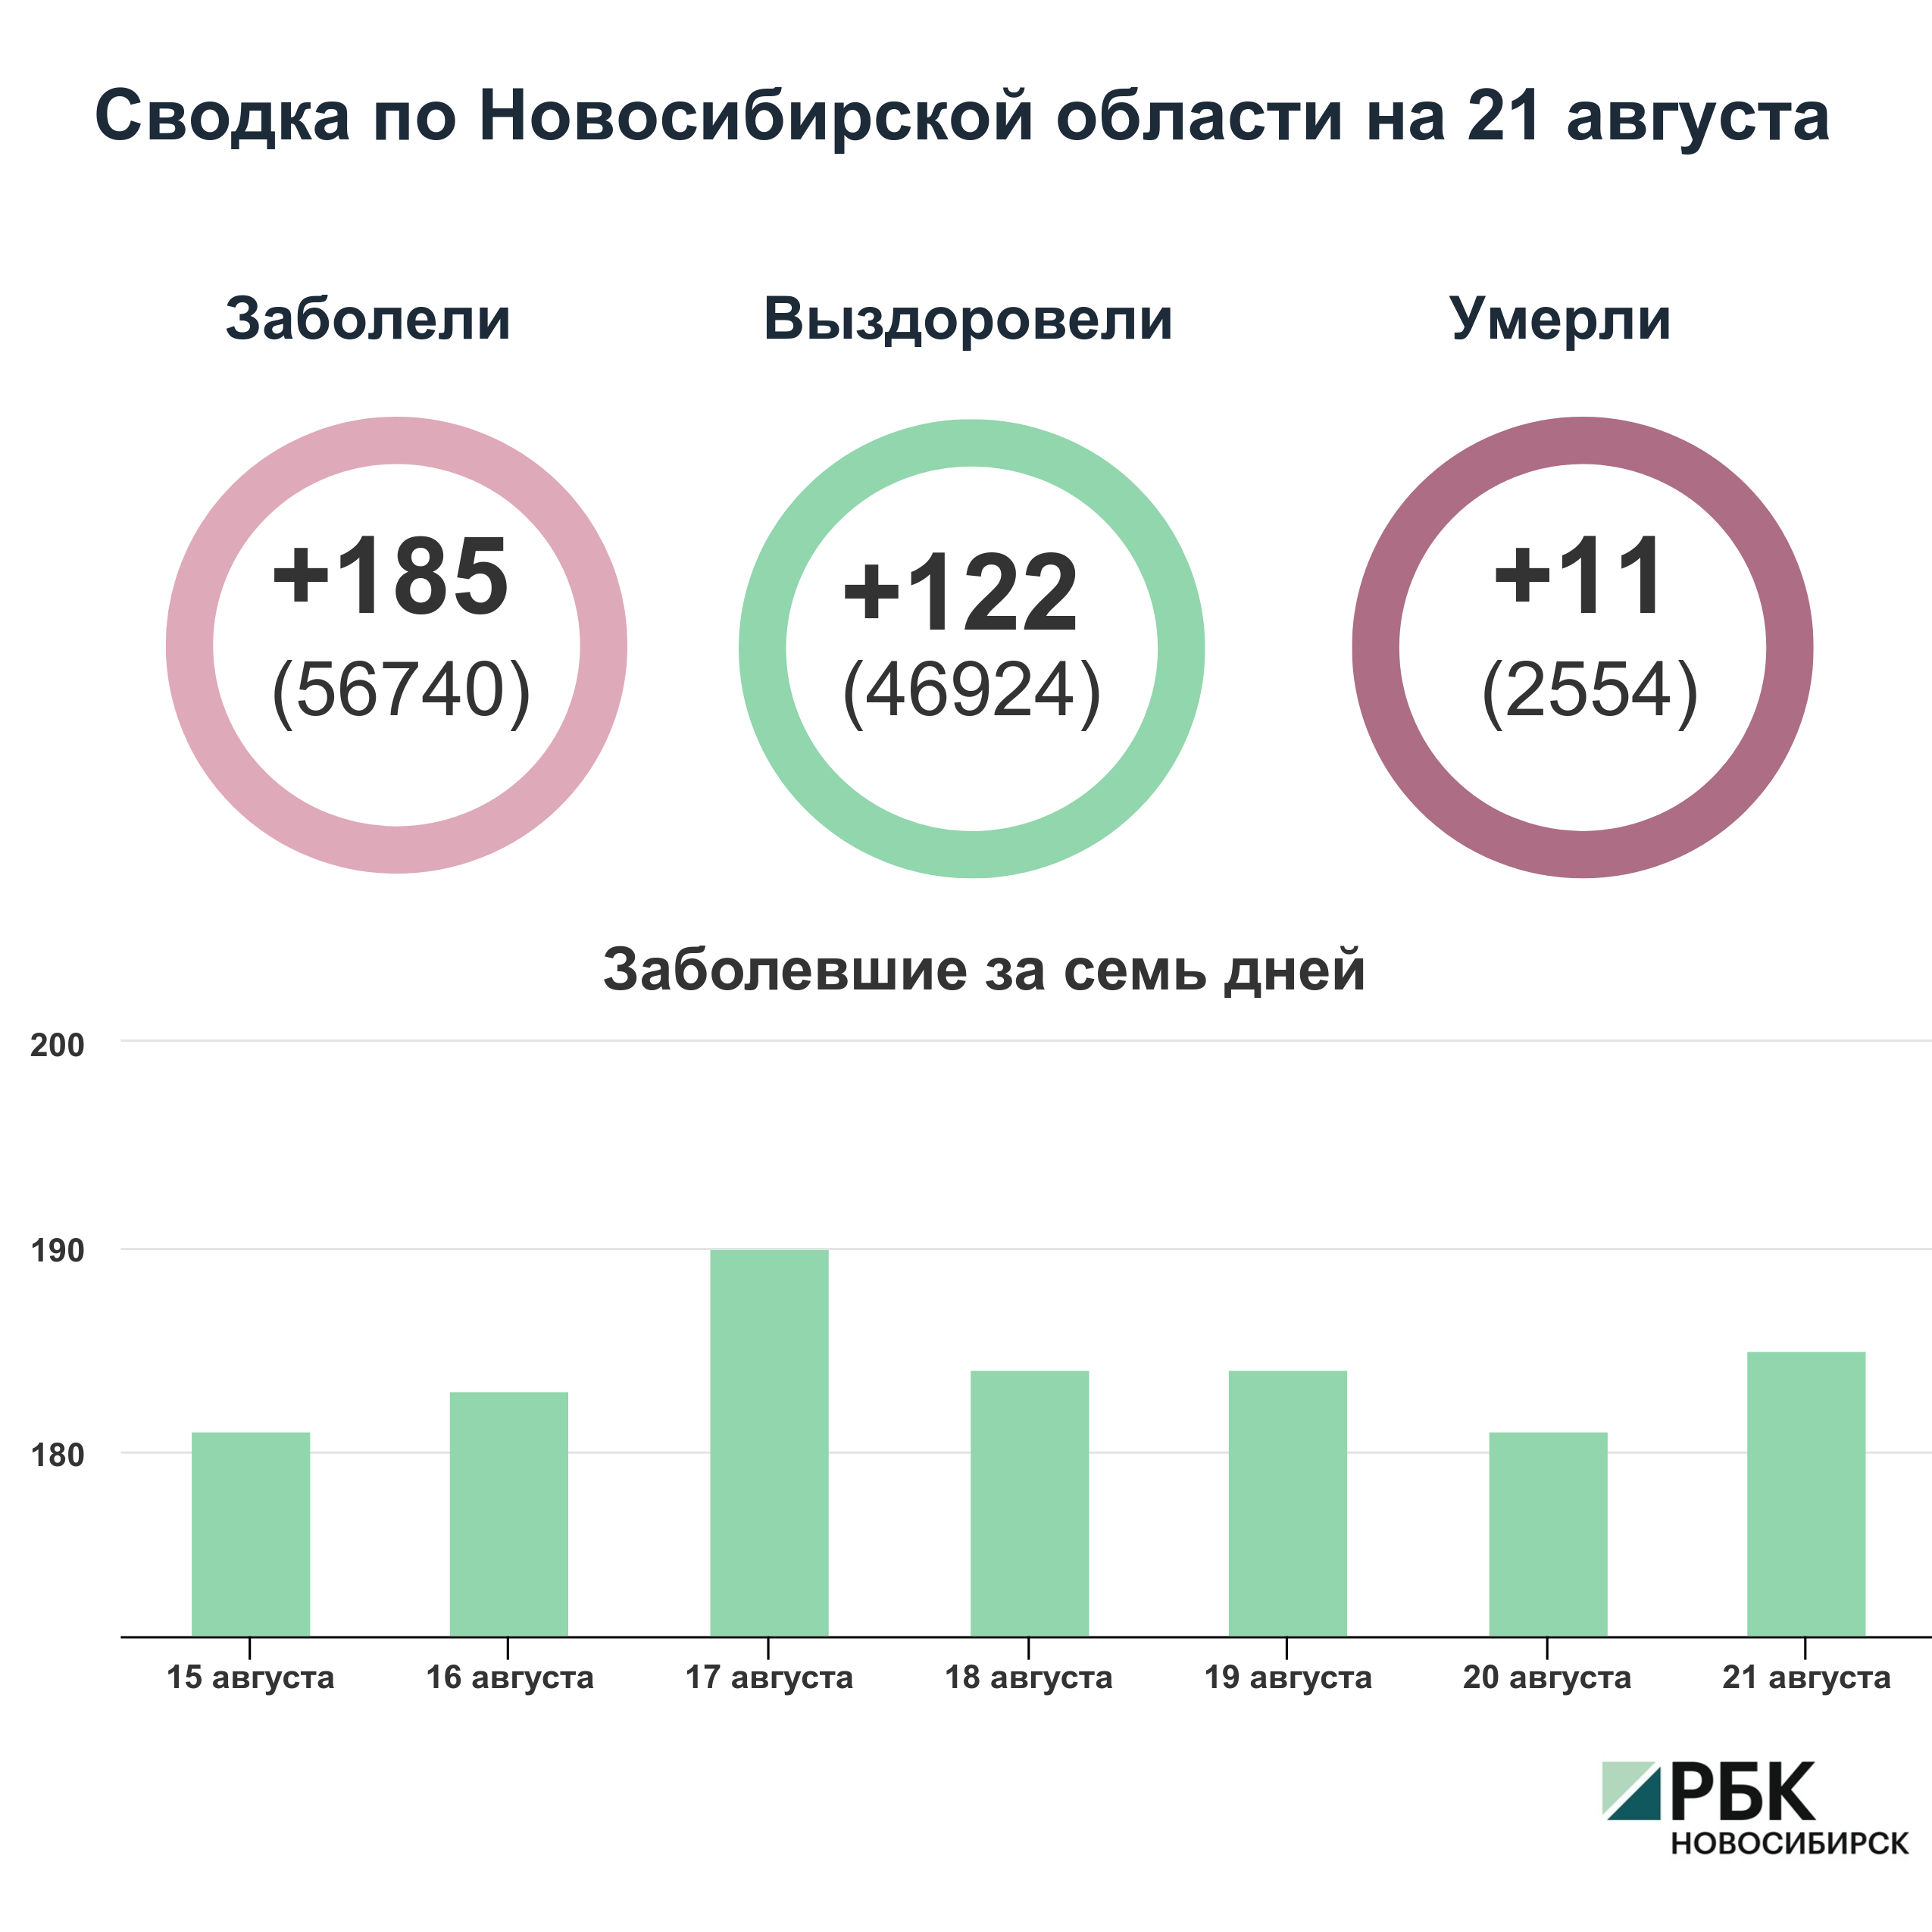 Коронавирус в Новосибирске: сводка на 21 августа